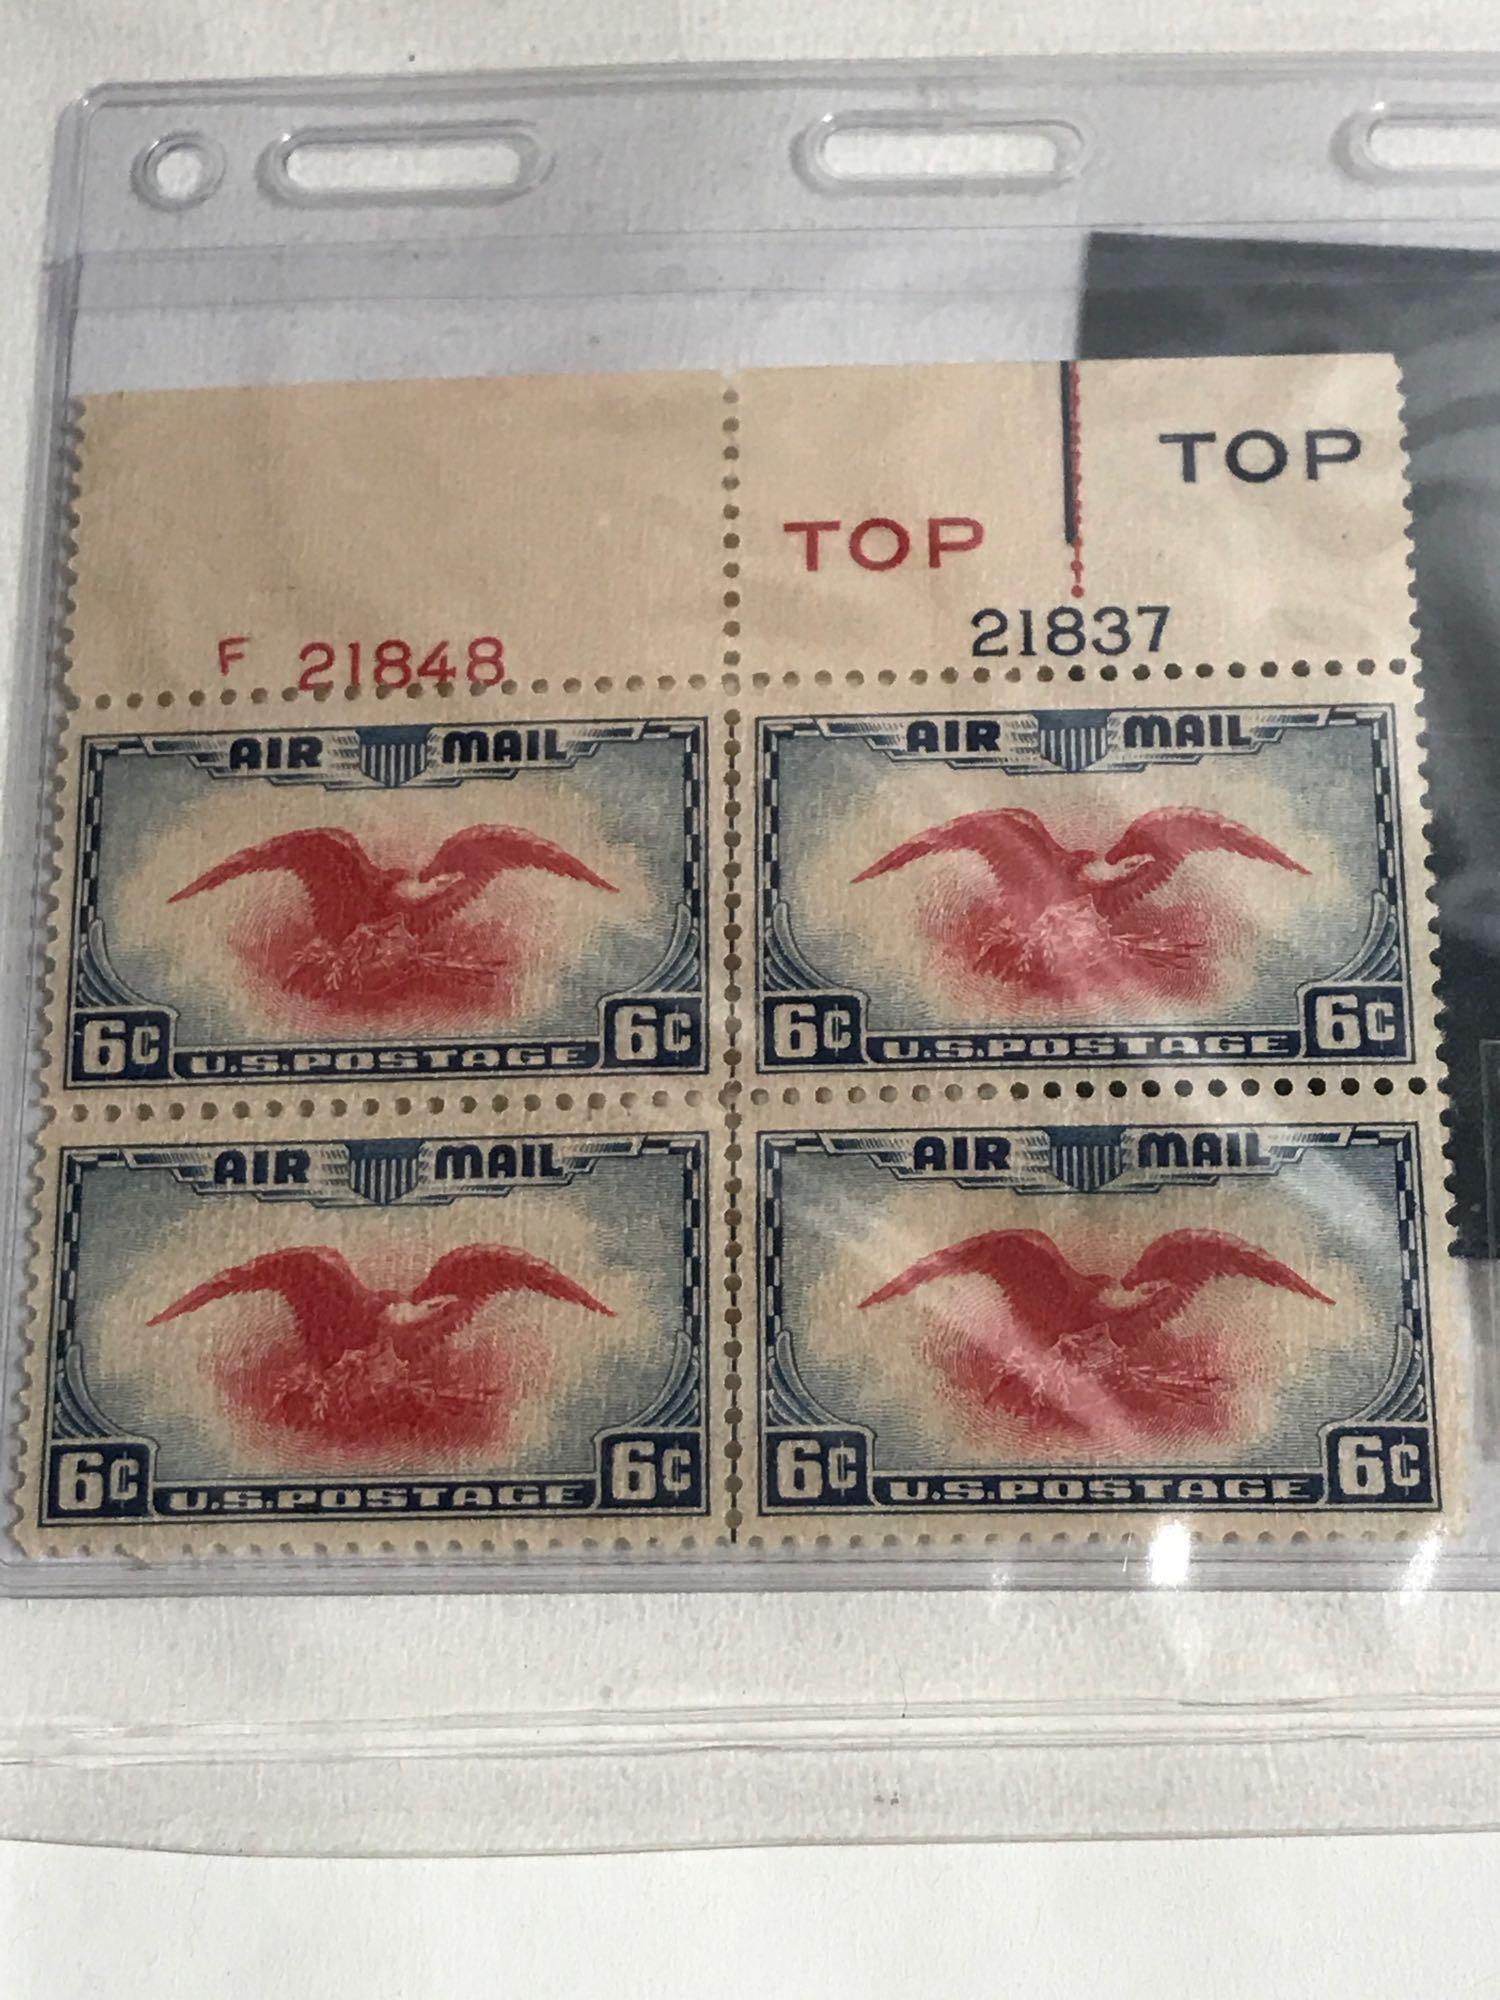 War Bond Stamp 1936 Stamp Many Others